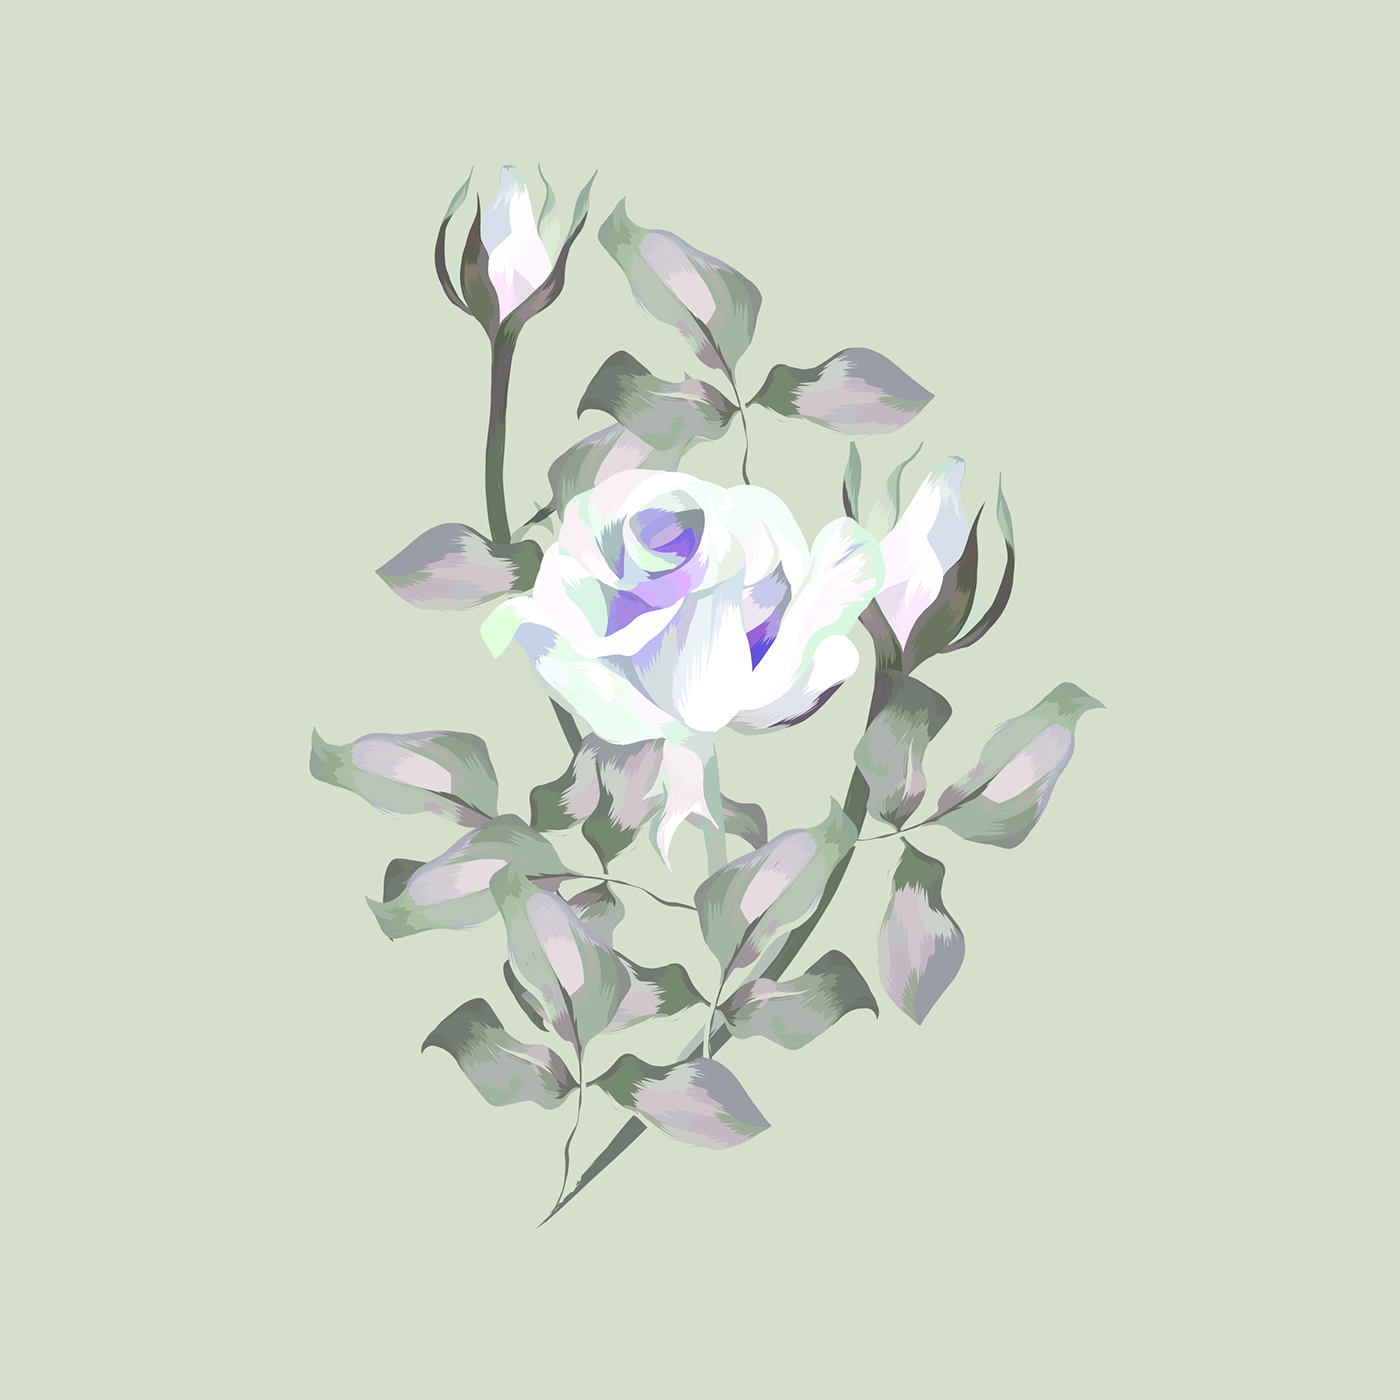 Digital Art  digital illustration Drawing  floral floralillustration Flowers ILLUSTRATION  Nature pattern surface design